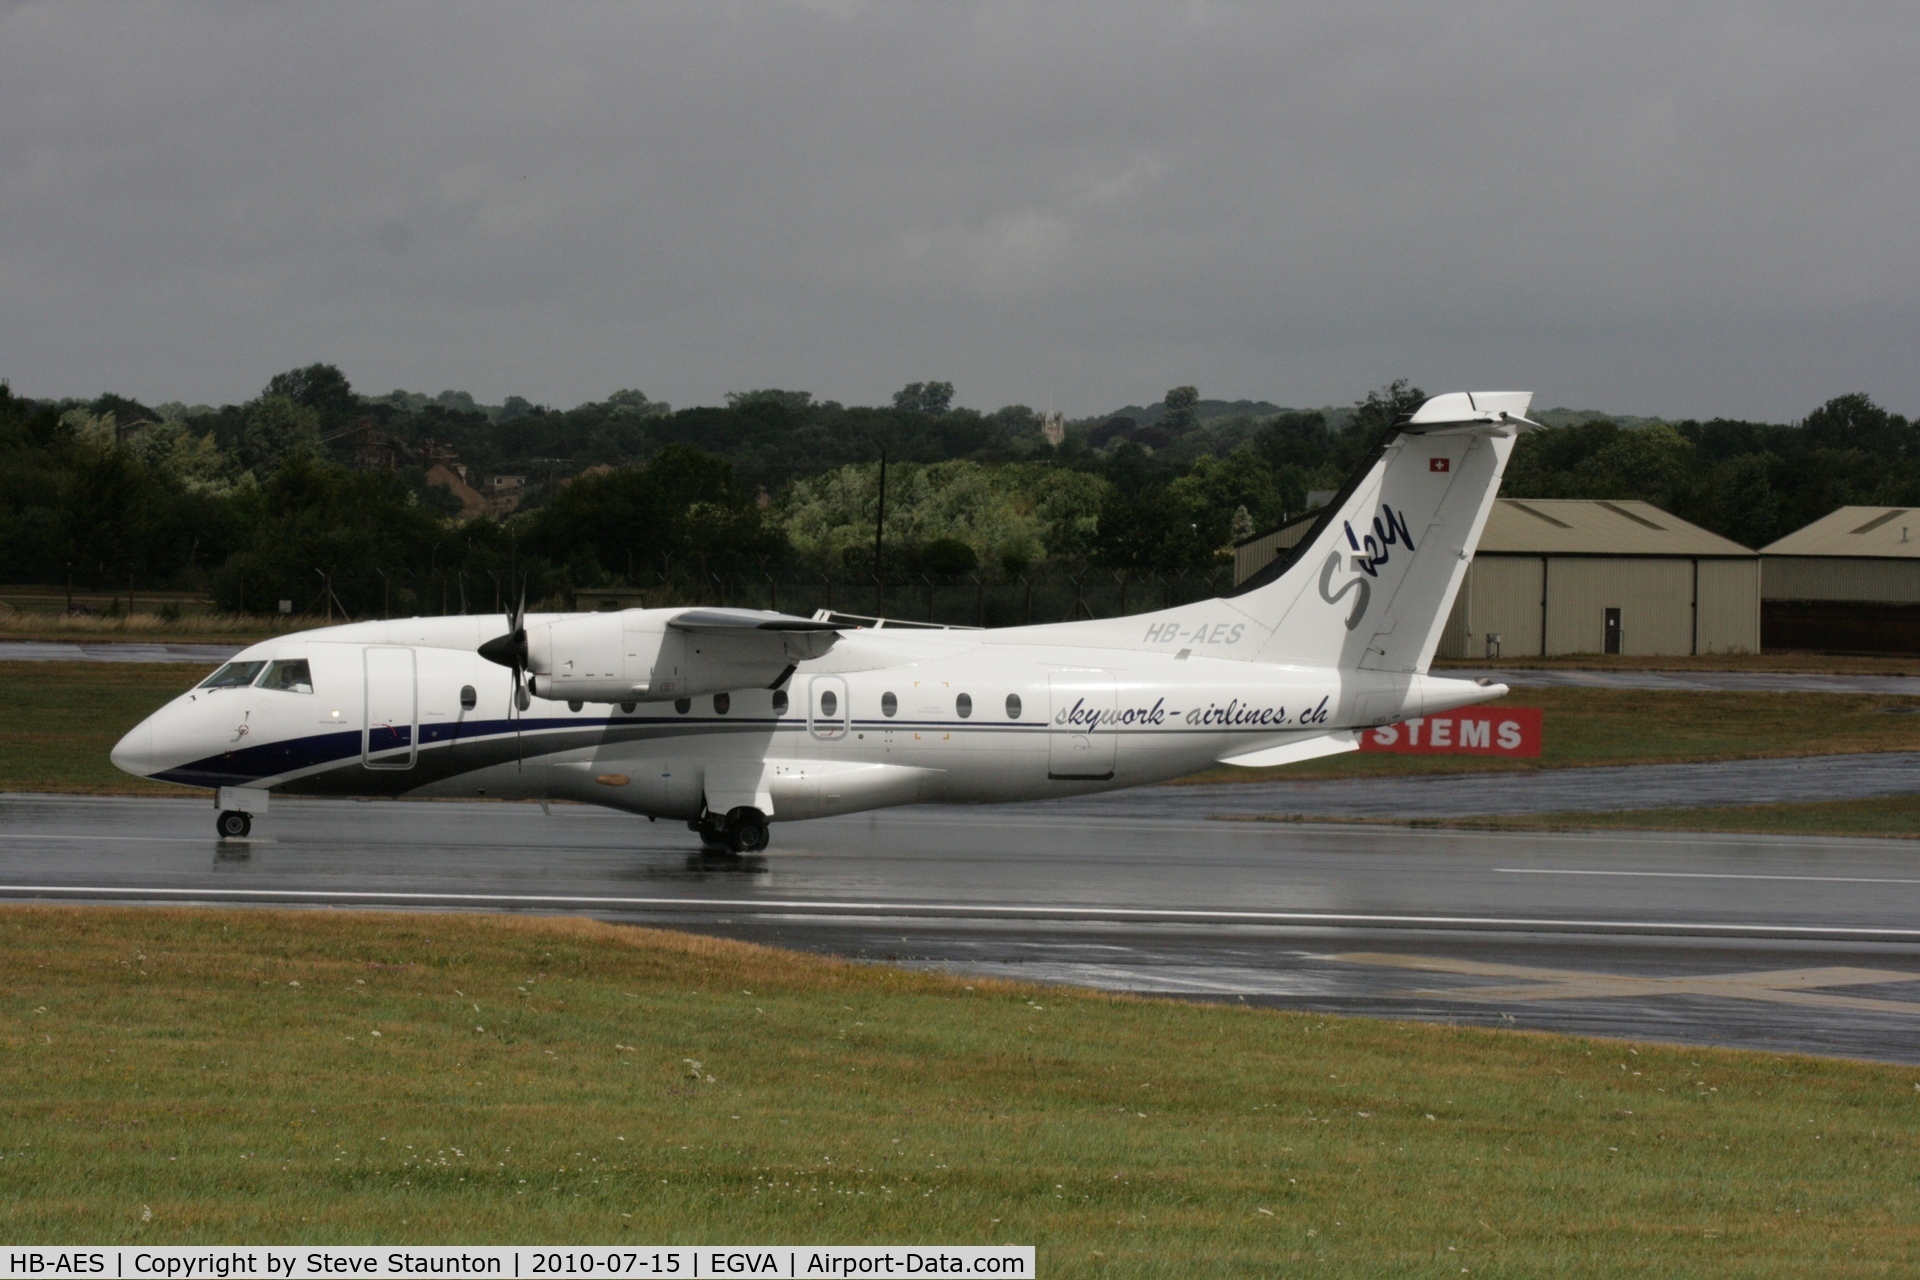 HB-AES, 1995 Dornier 328-110 C/N 3021, Taken at the Royal International Air Tattoo 2010